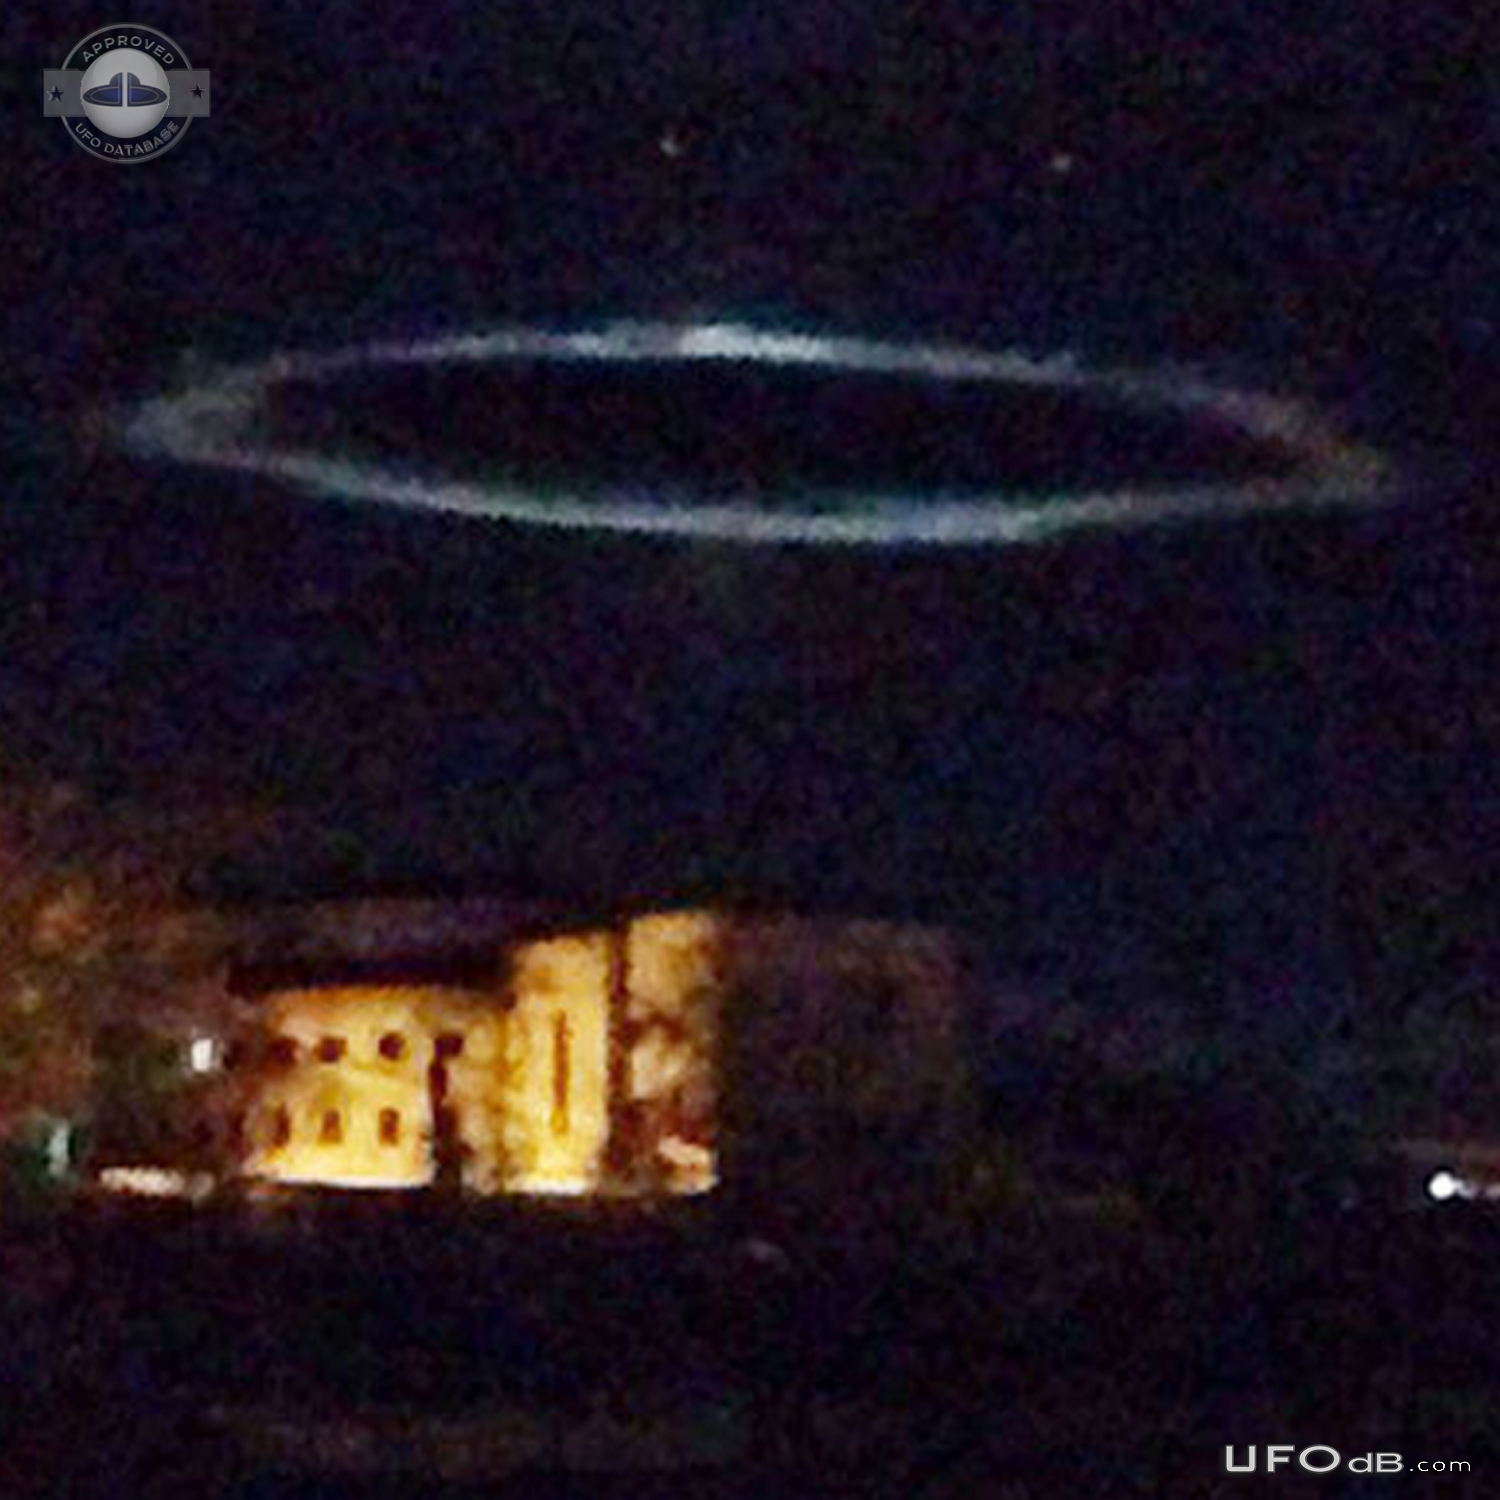 Saucer UFOs seen in Ulan-Ude close to the LVRZ factory - Buryatia Russ UFO Picture #745-3